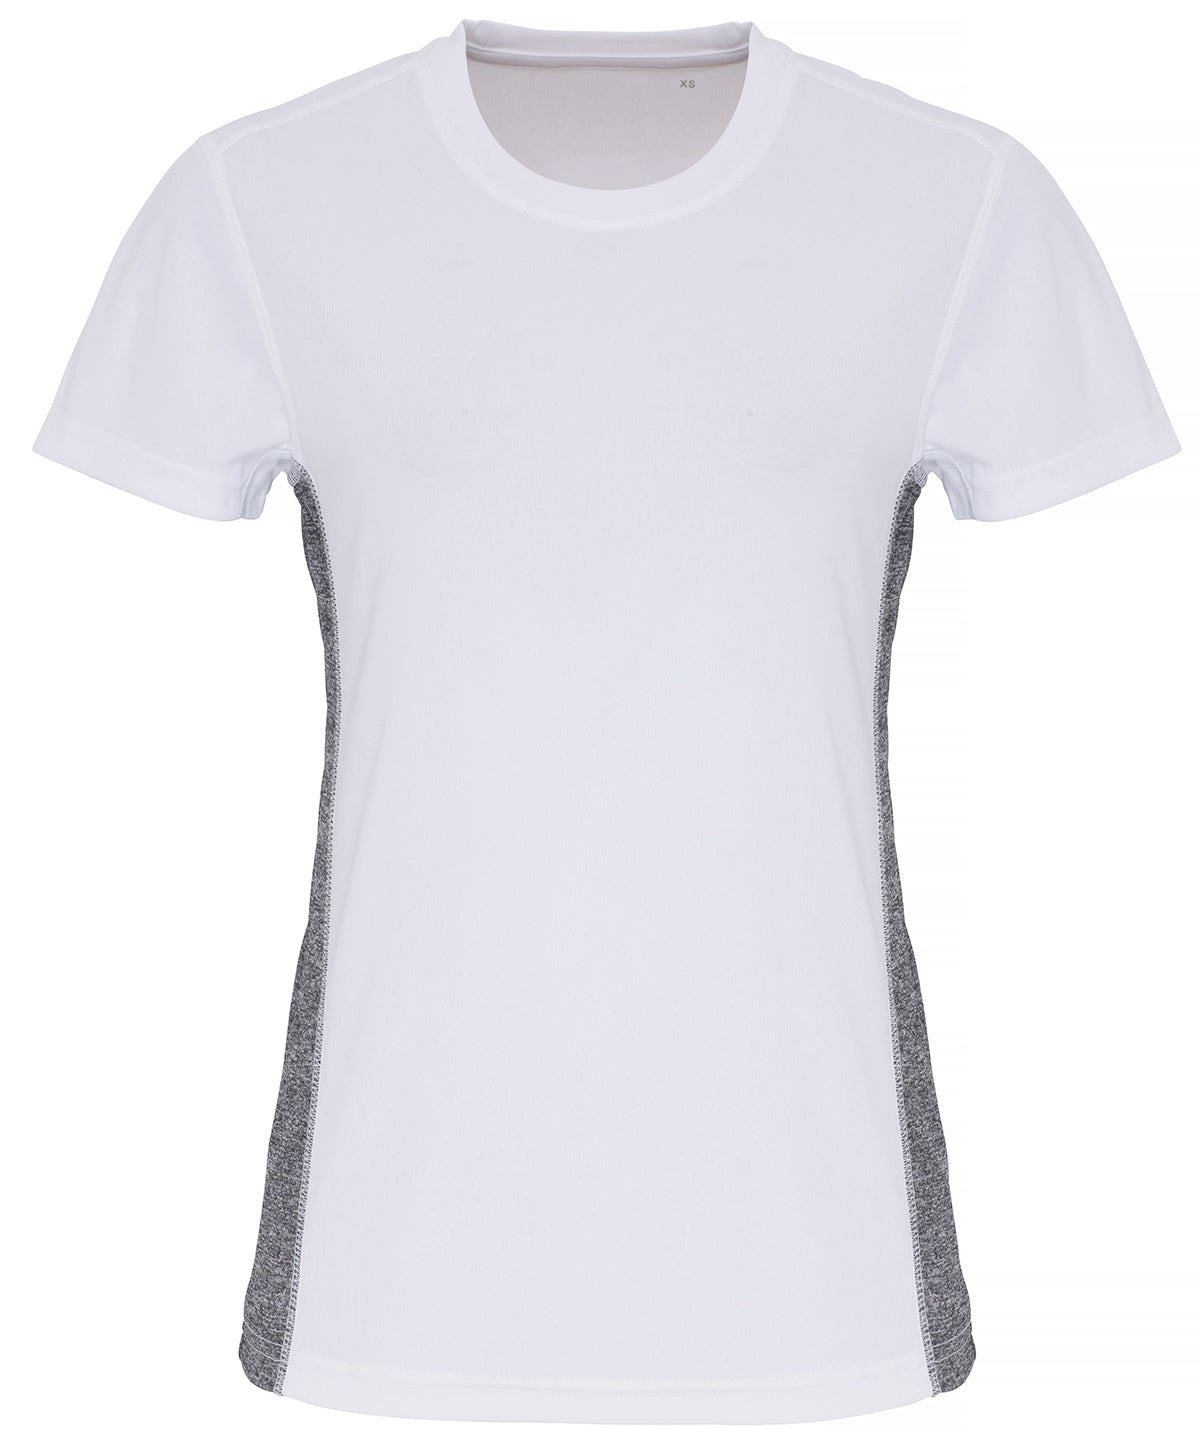 Stuttermabolir - Women's TriDri® Contrast Panel Performance T-shirt